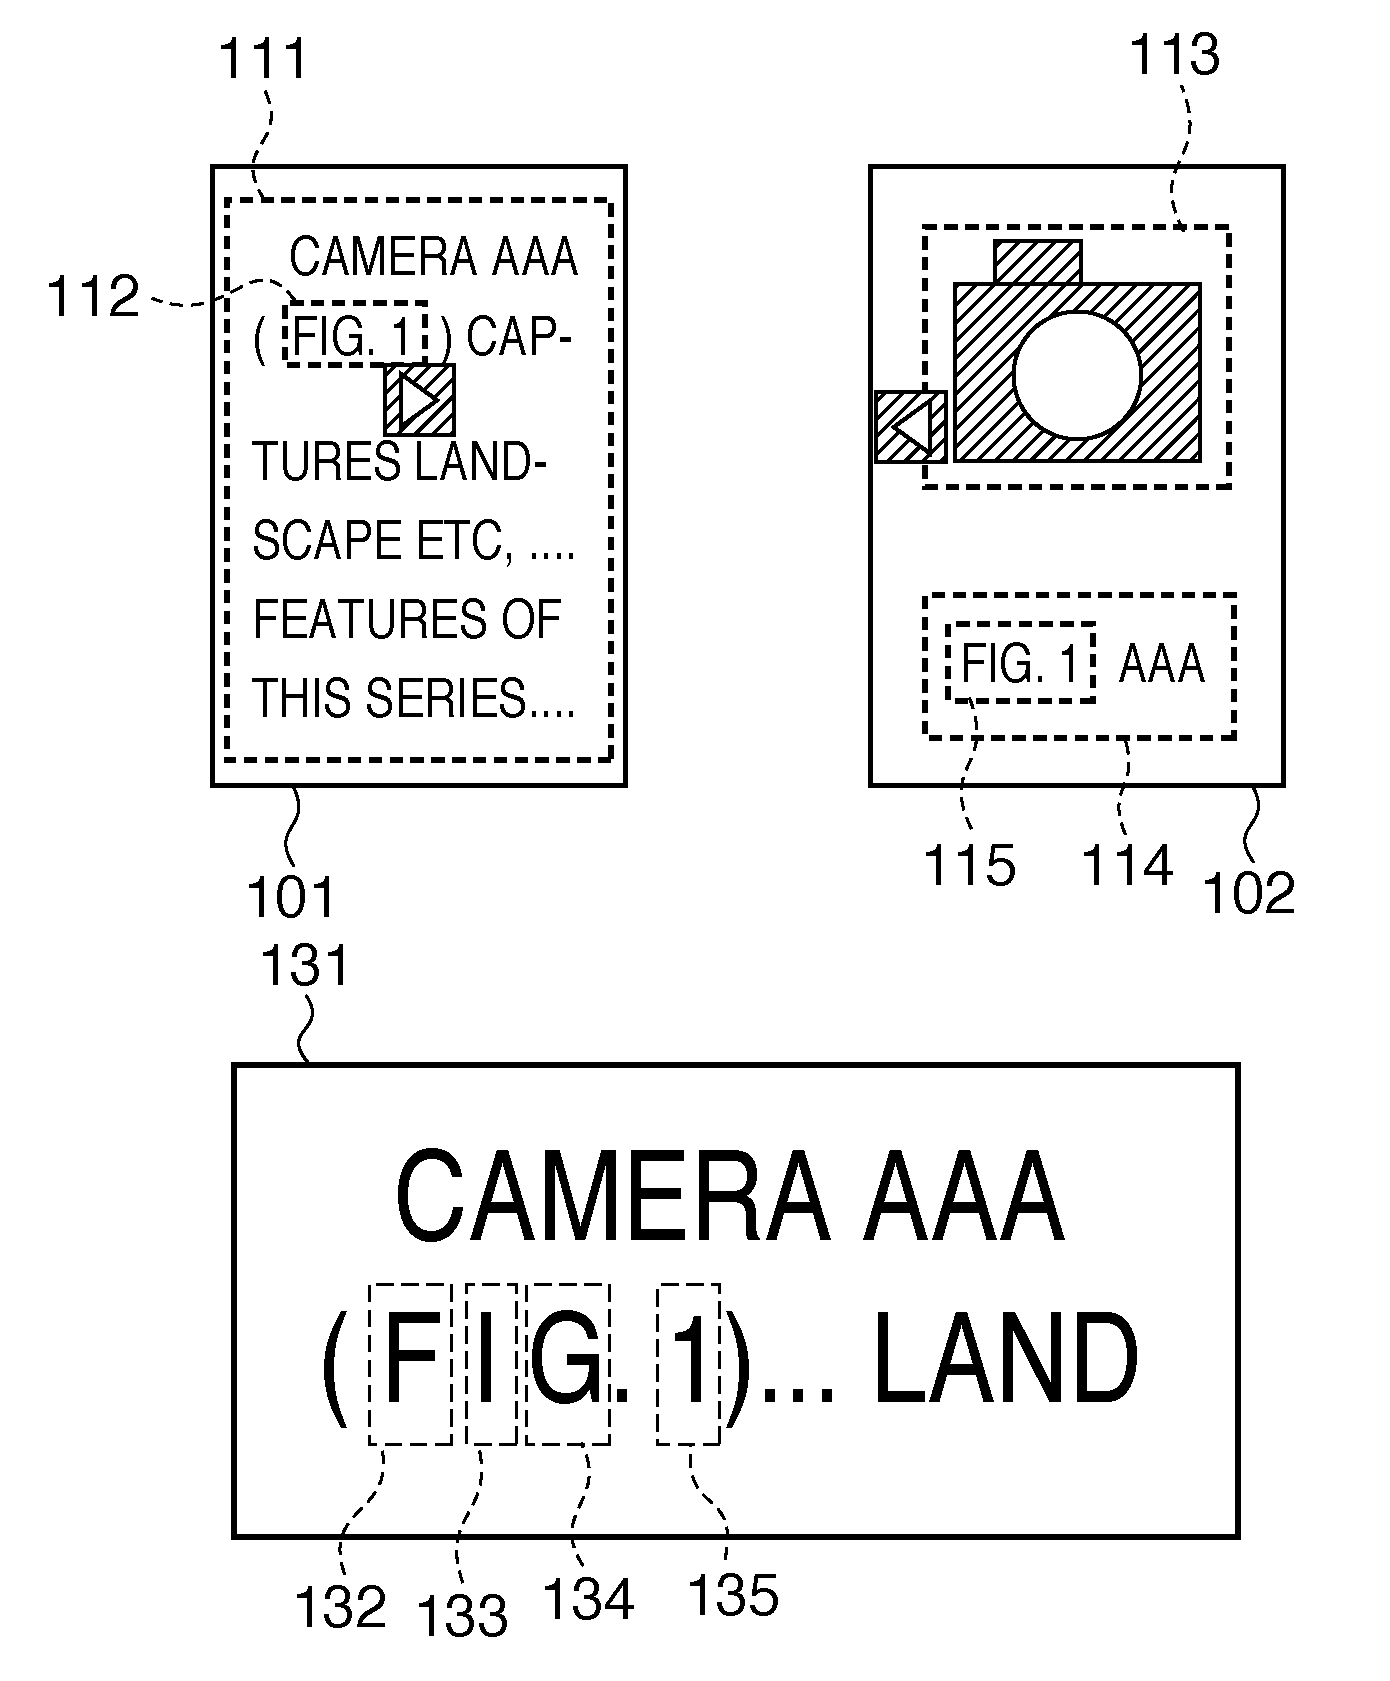 Processing document image including caption region